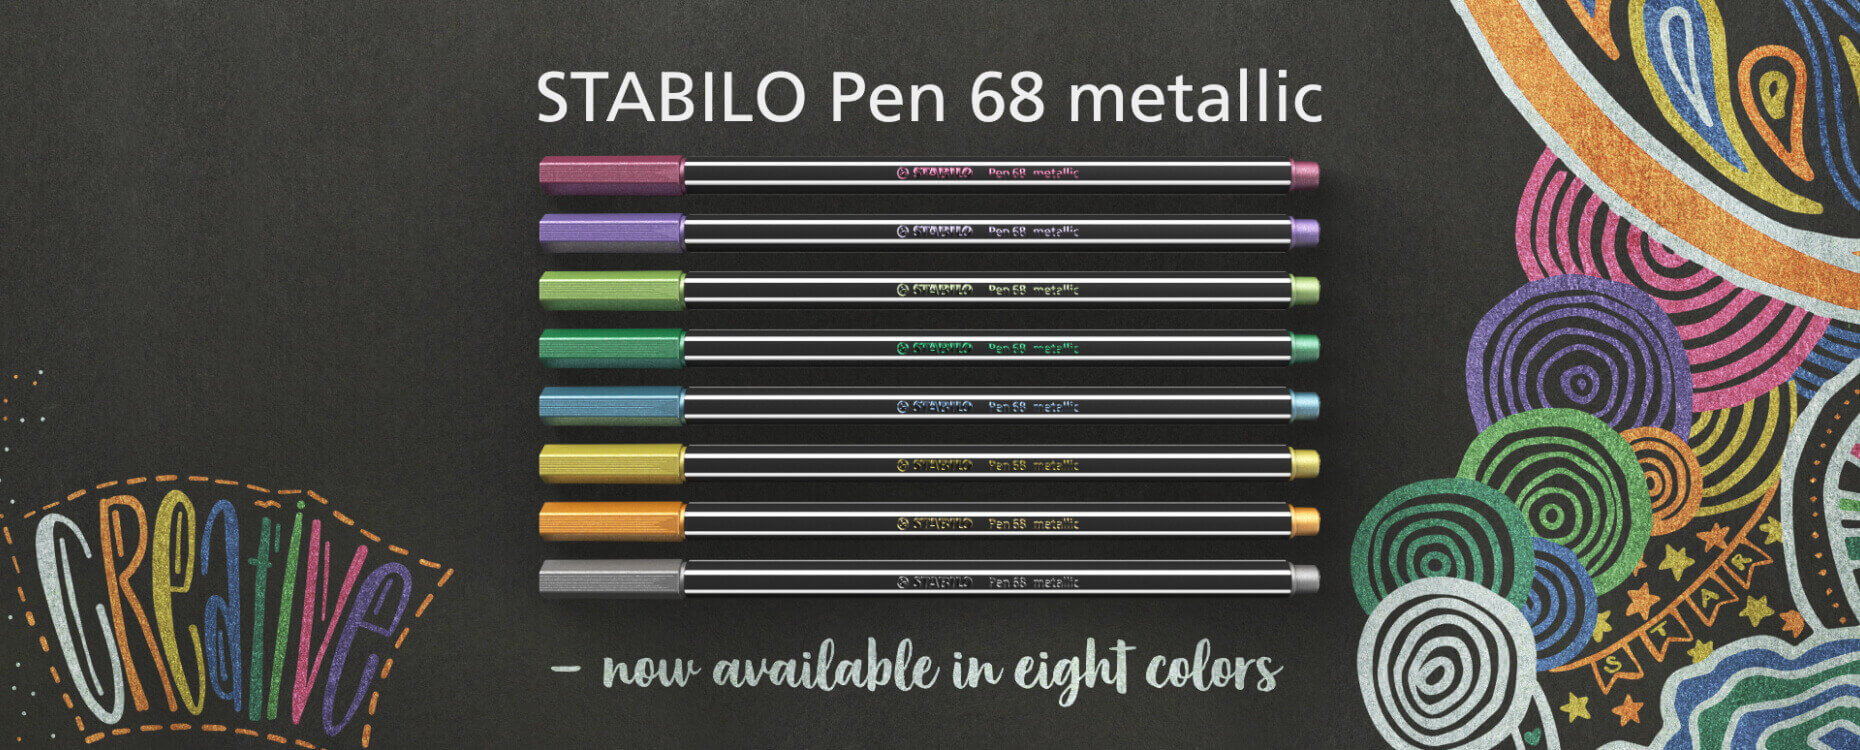 https://www.stabilo.com/it/fileadmin/products/coloring/pen_68_metallic/Pen69-metallic_allcolors_WebSlider3_1860_750.jpg